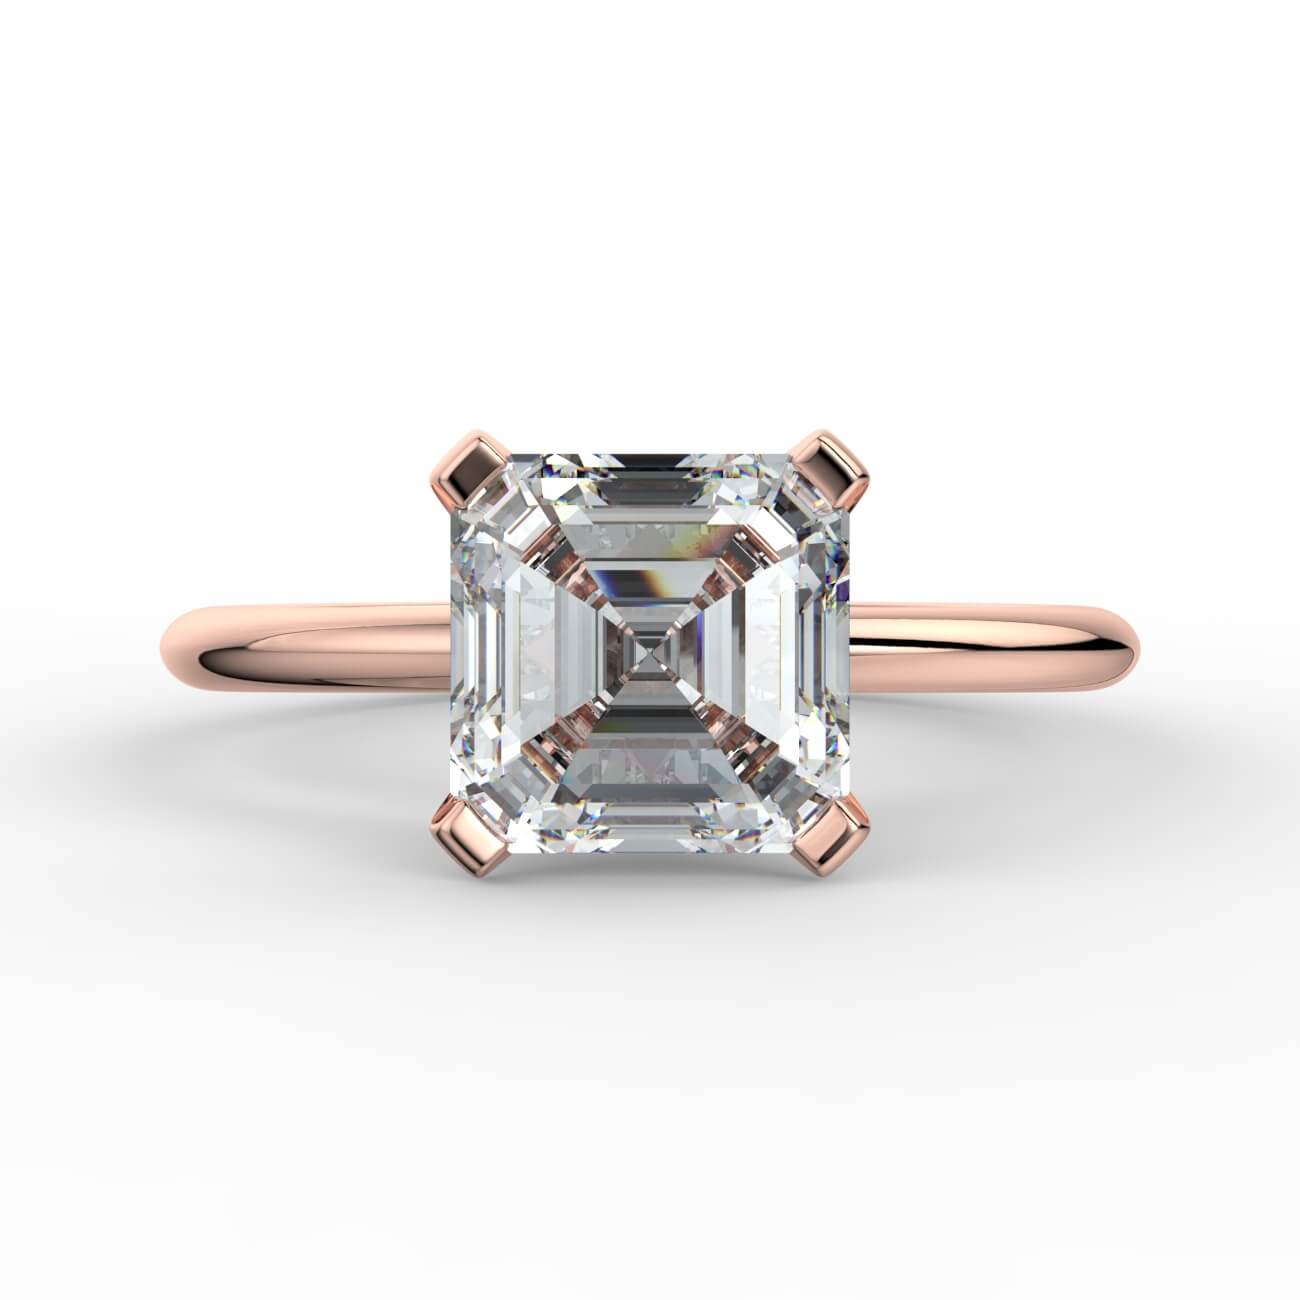 Knife-edge solitaire asscher cut diamond engagement ring in rose gold – Australian Diamond Network